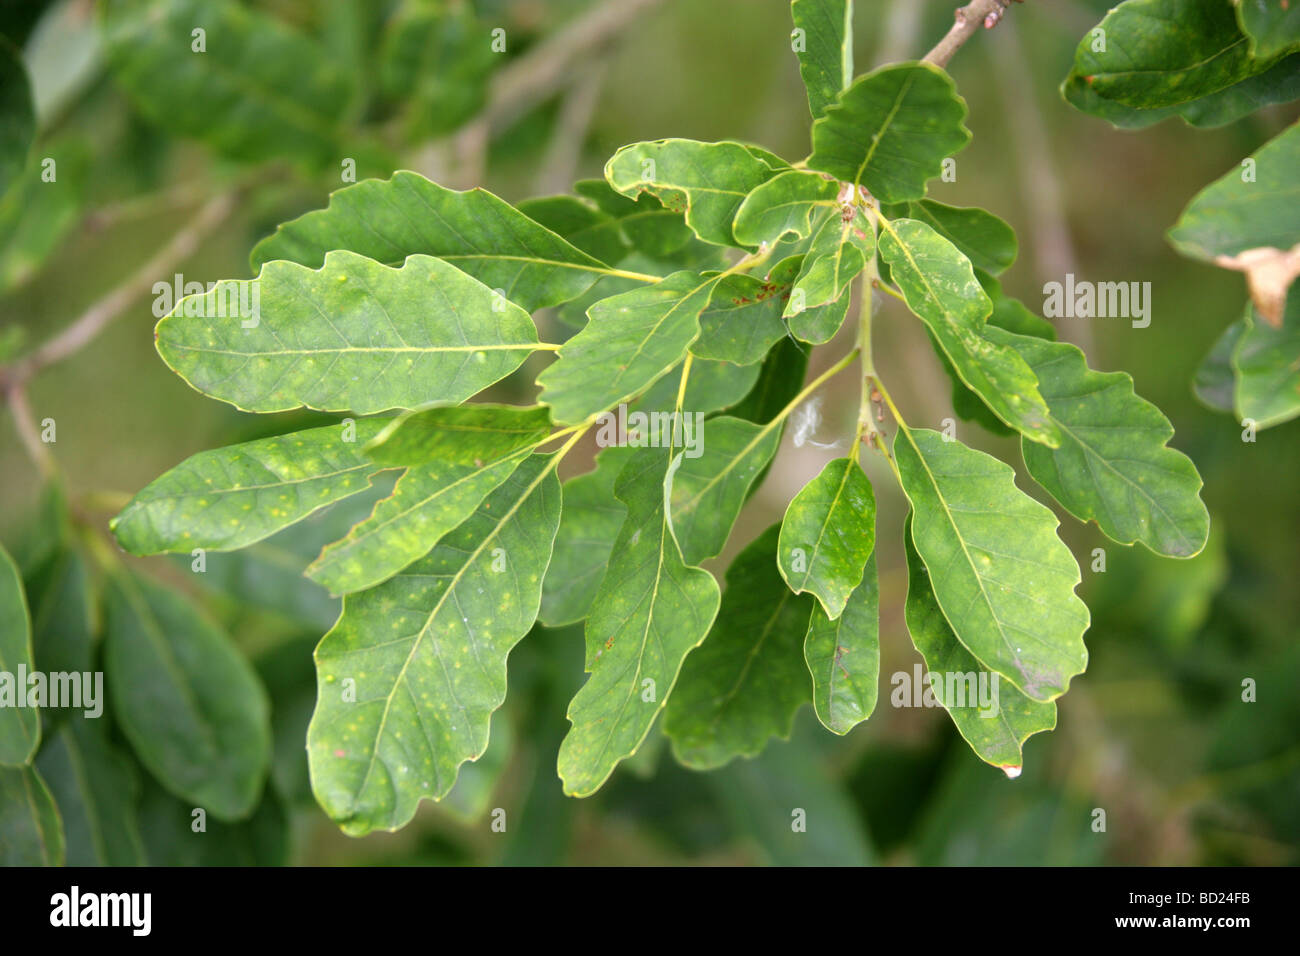 Aleppo Oak or Cyprus Oak Tree Leaves, Quercus boissieri syn Quercus infectoria var veneris, Fagaceae, Western Asia Stock Photo